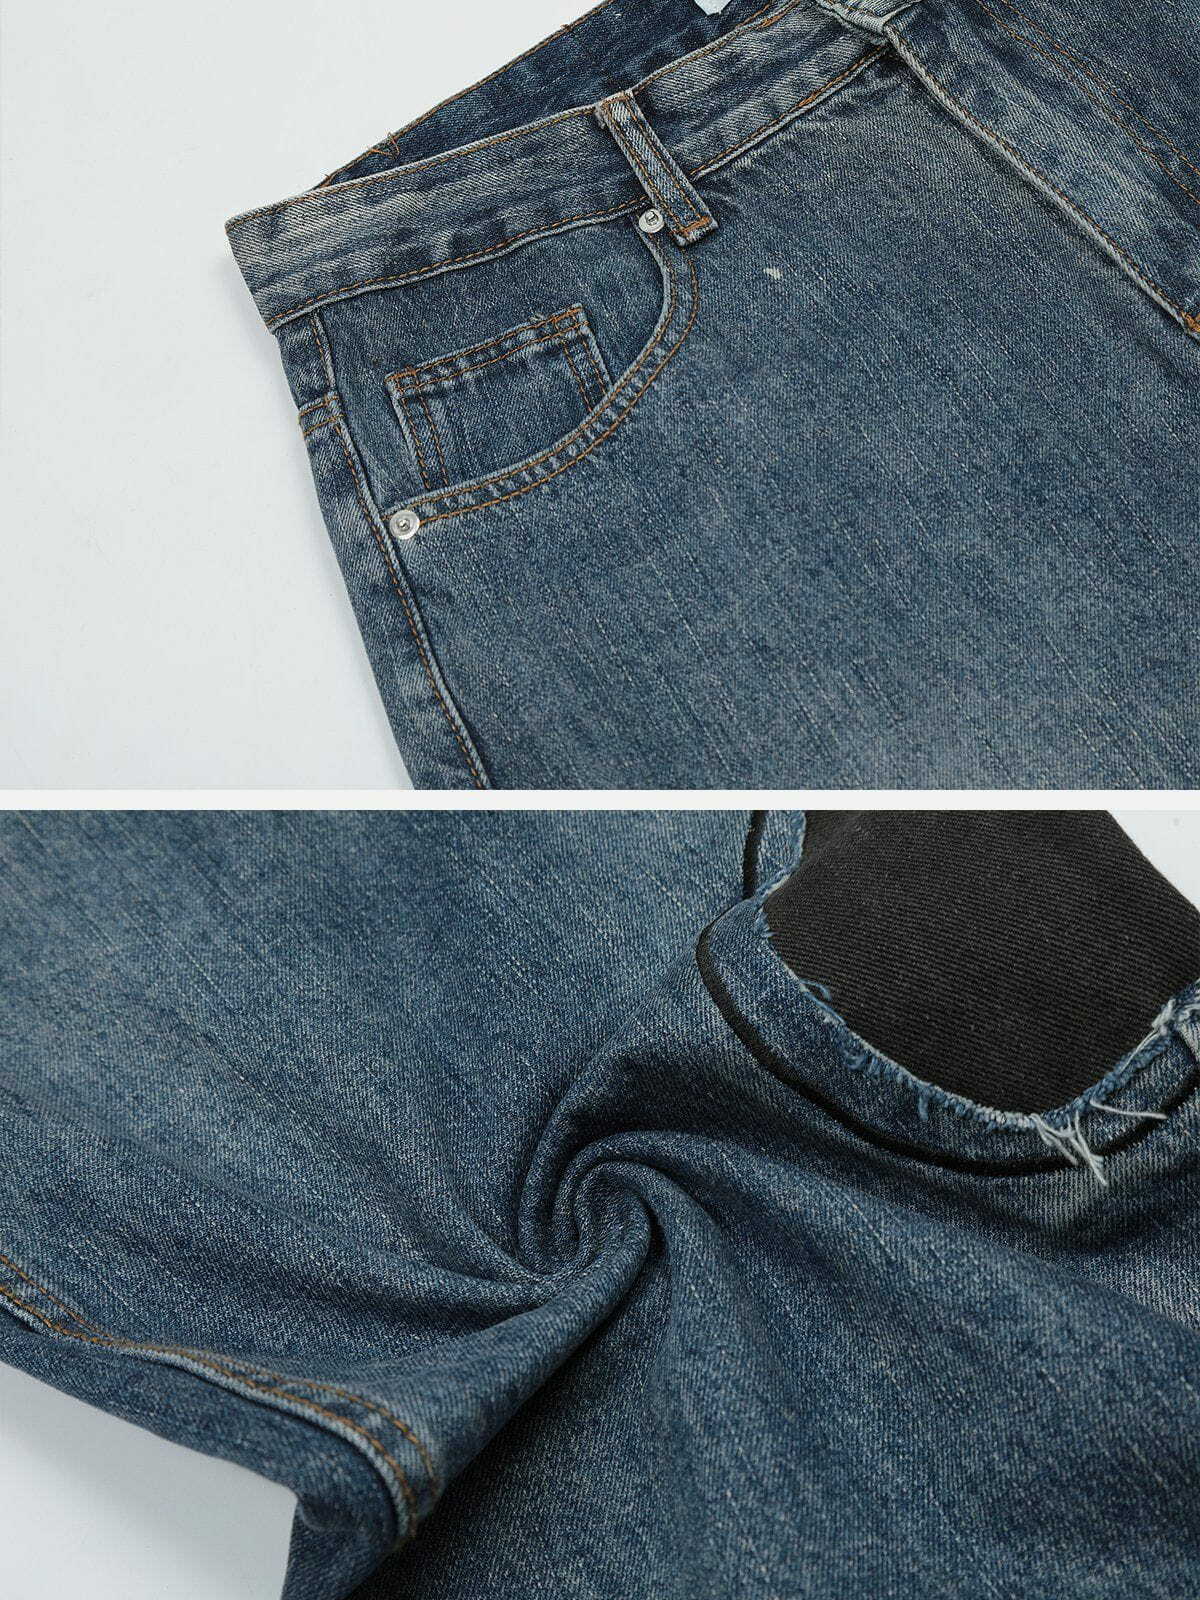 patchwork edgy jeans vintage streetwear charm 8702